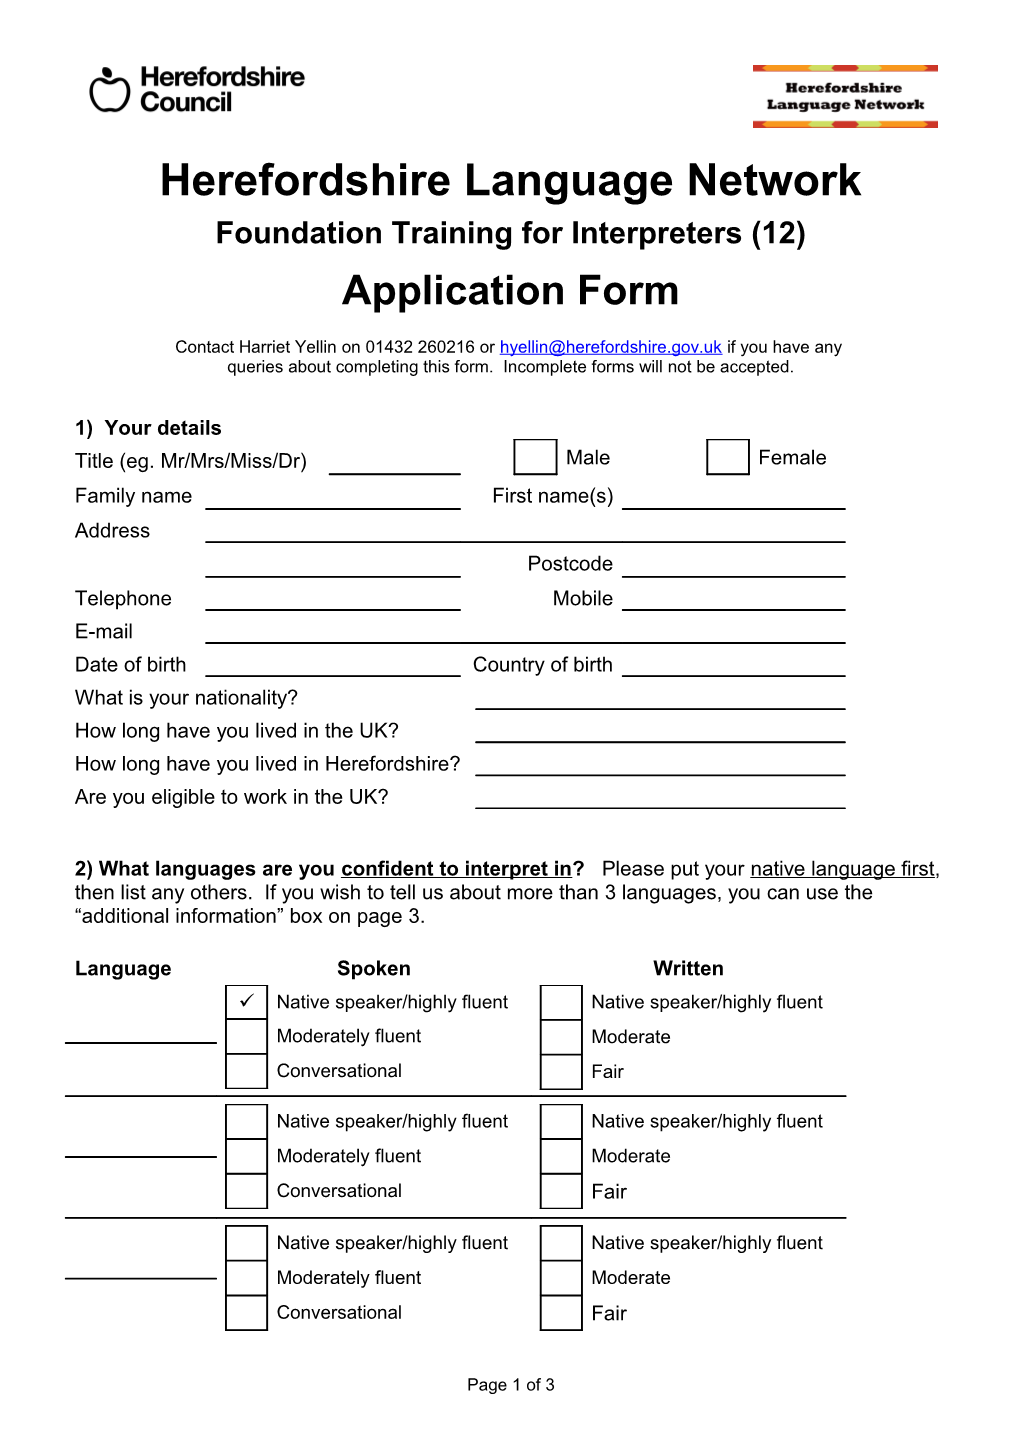 Herefordshire Language Network Foundation Training Application Form